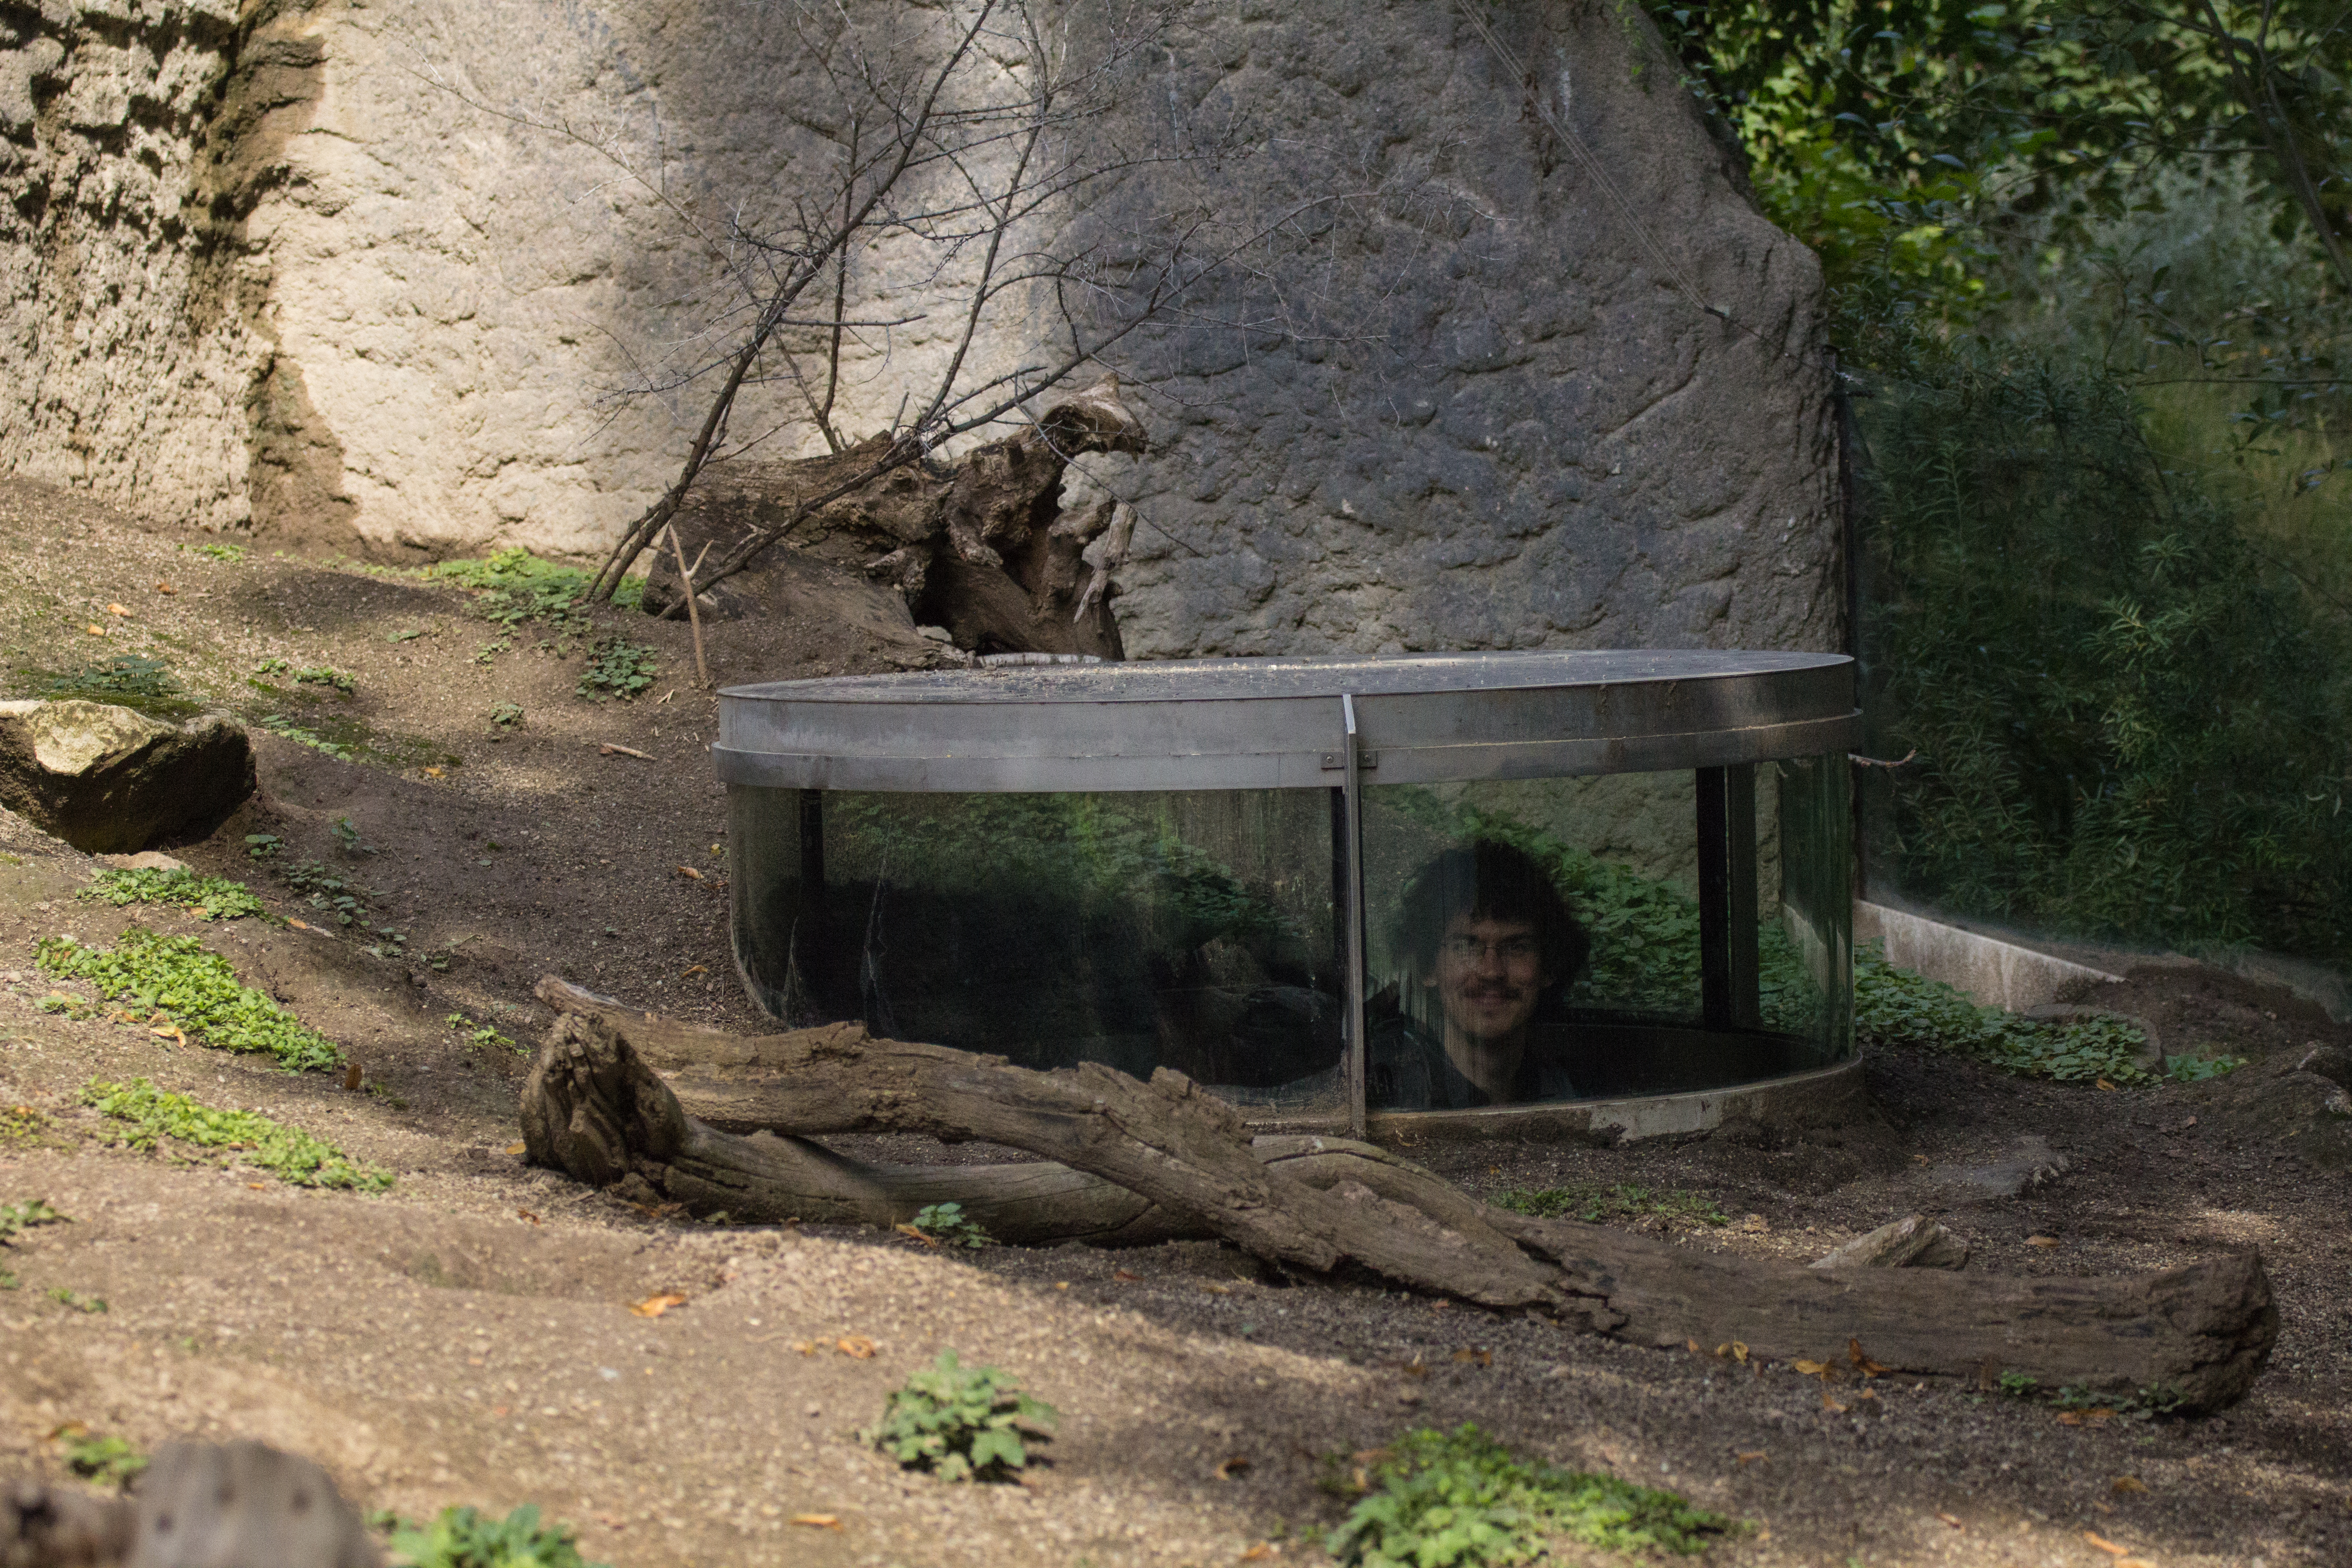 Zo zoo Schonbrunn - zvieratko bez popisnej tabuľky :D